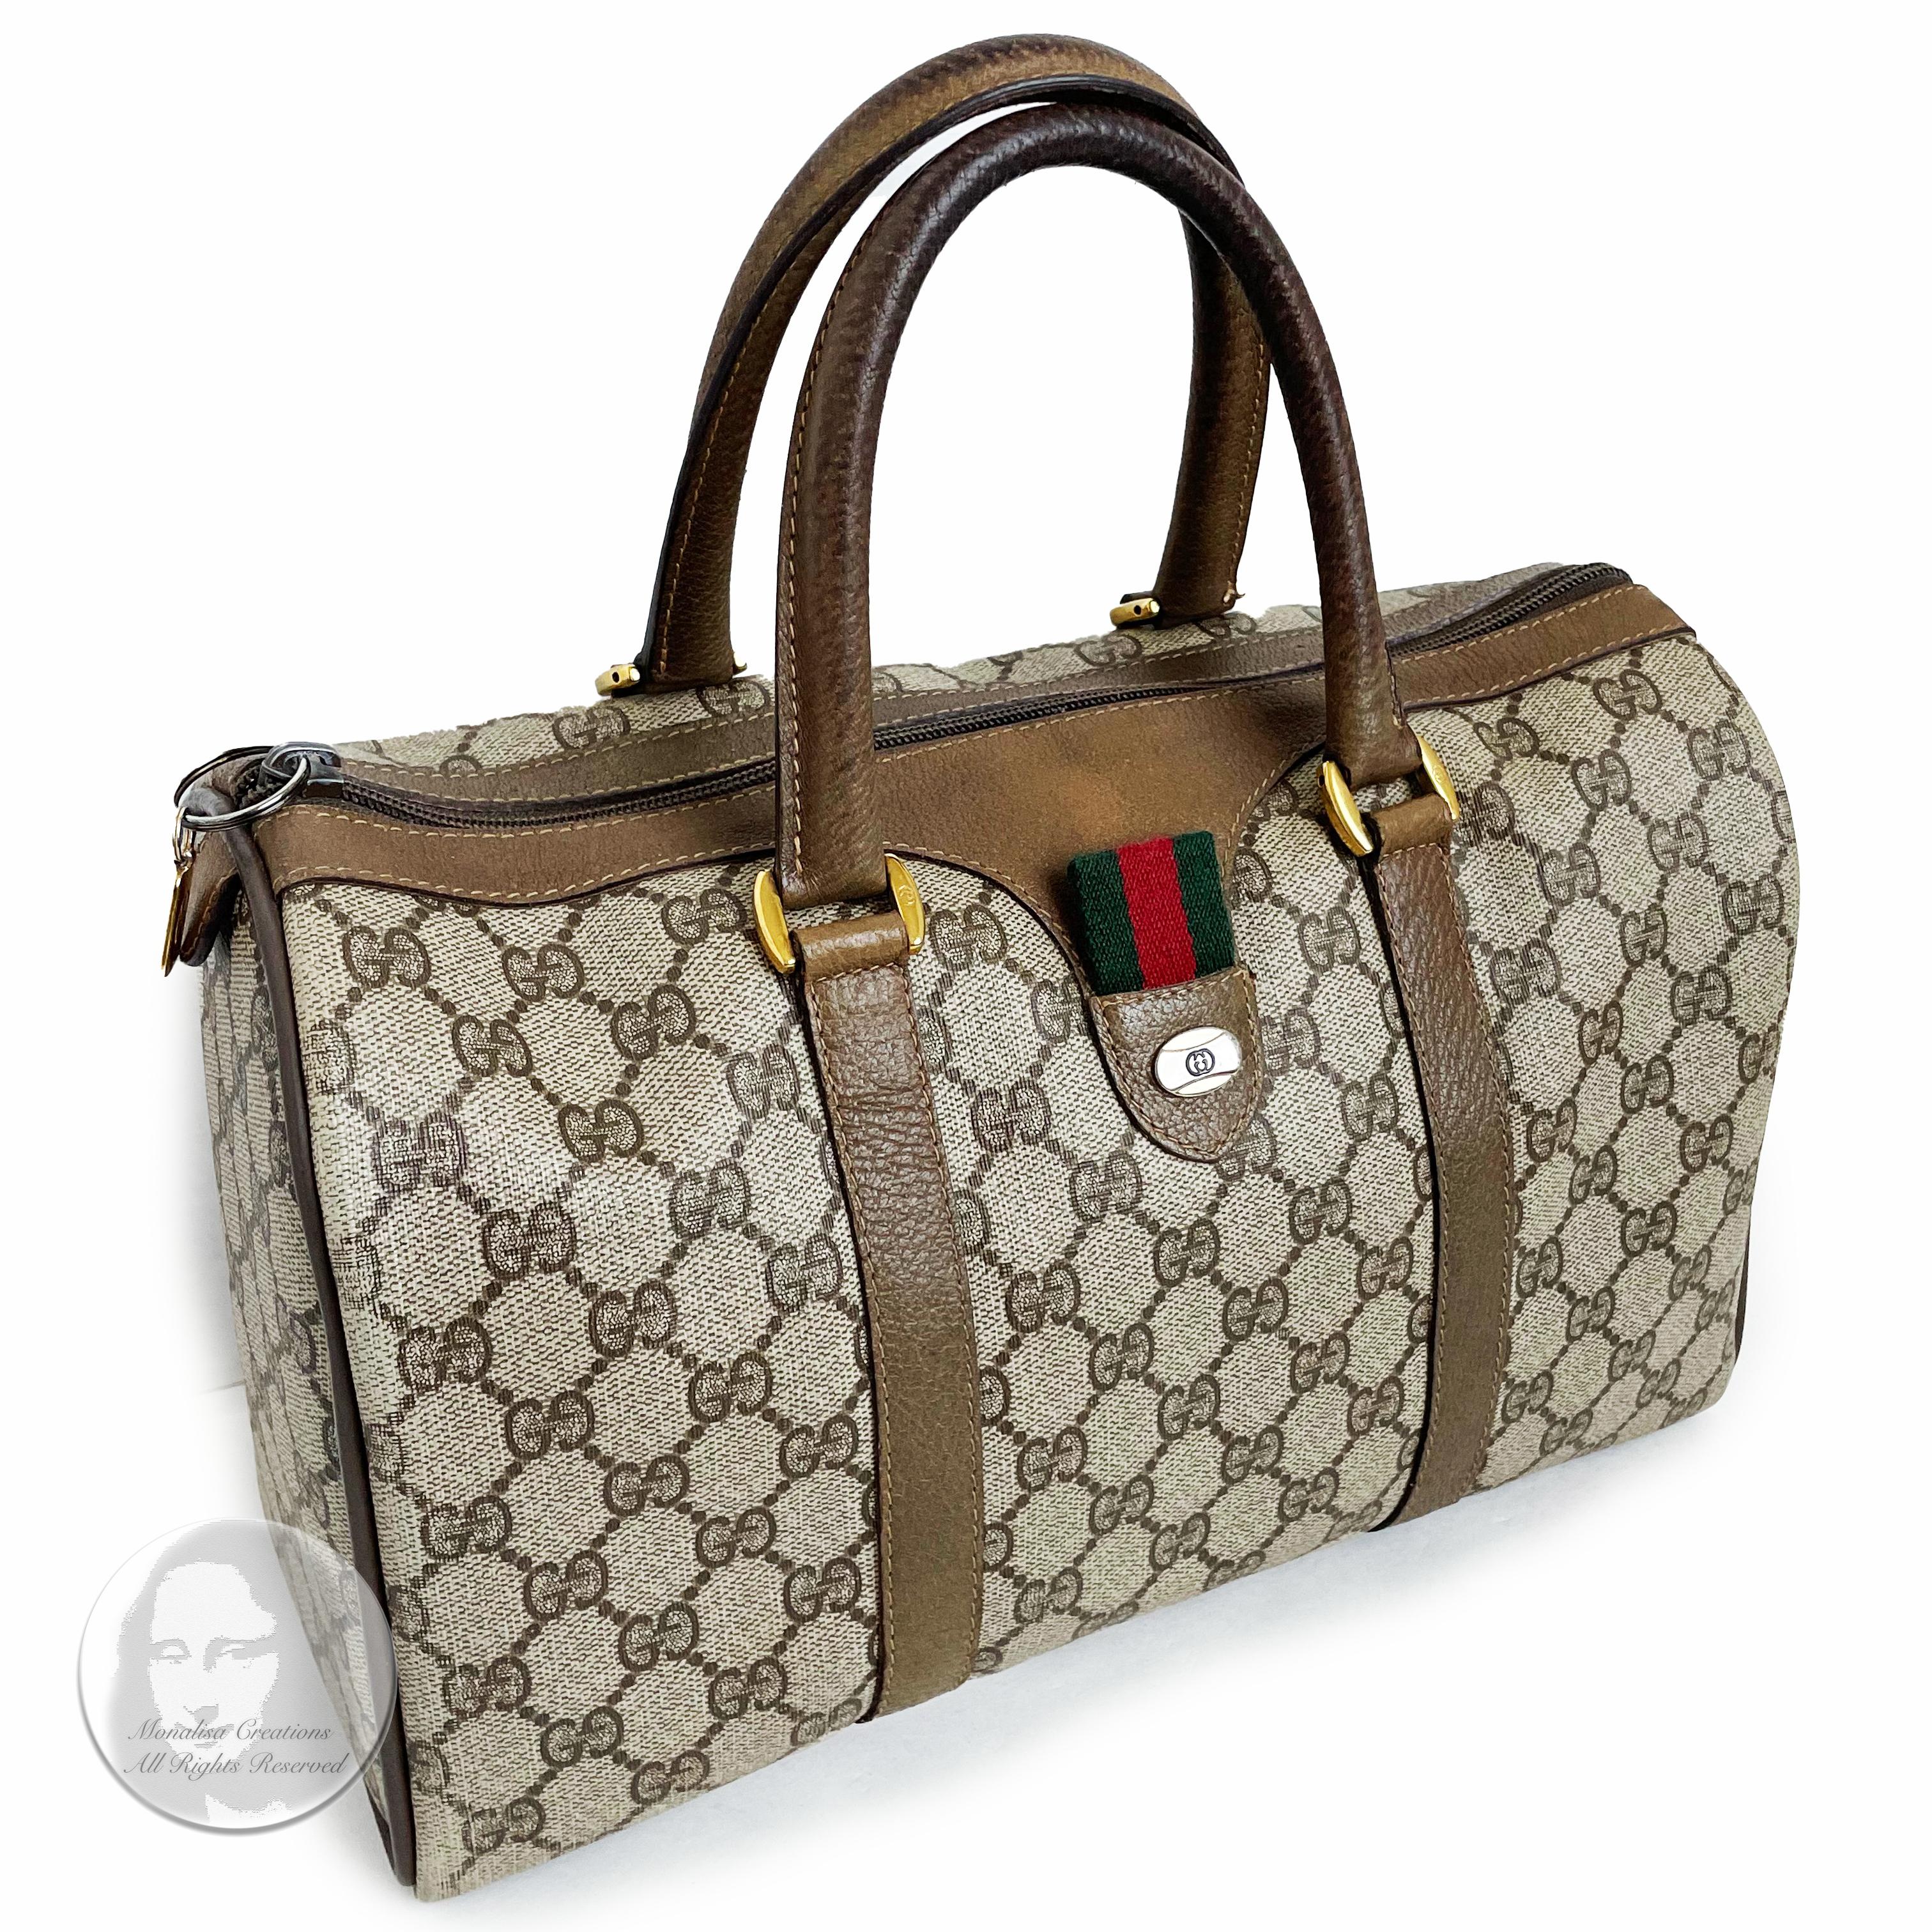 Vintage Gucci Speedy Handbag - 2 For Sale on 1stDibs